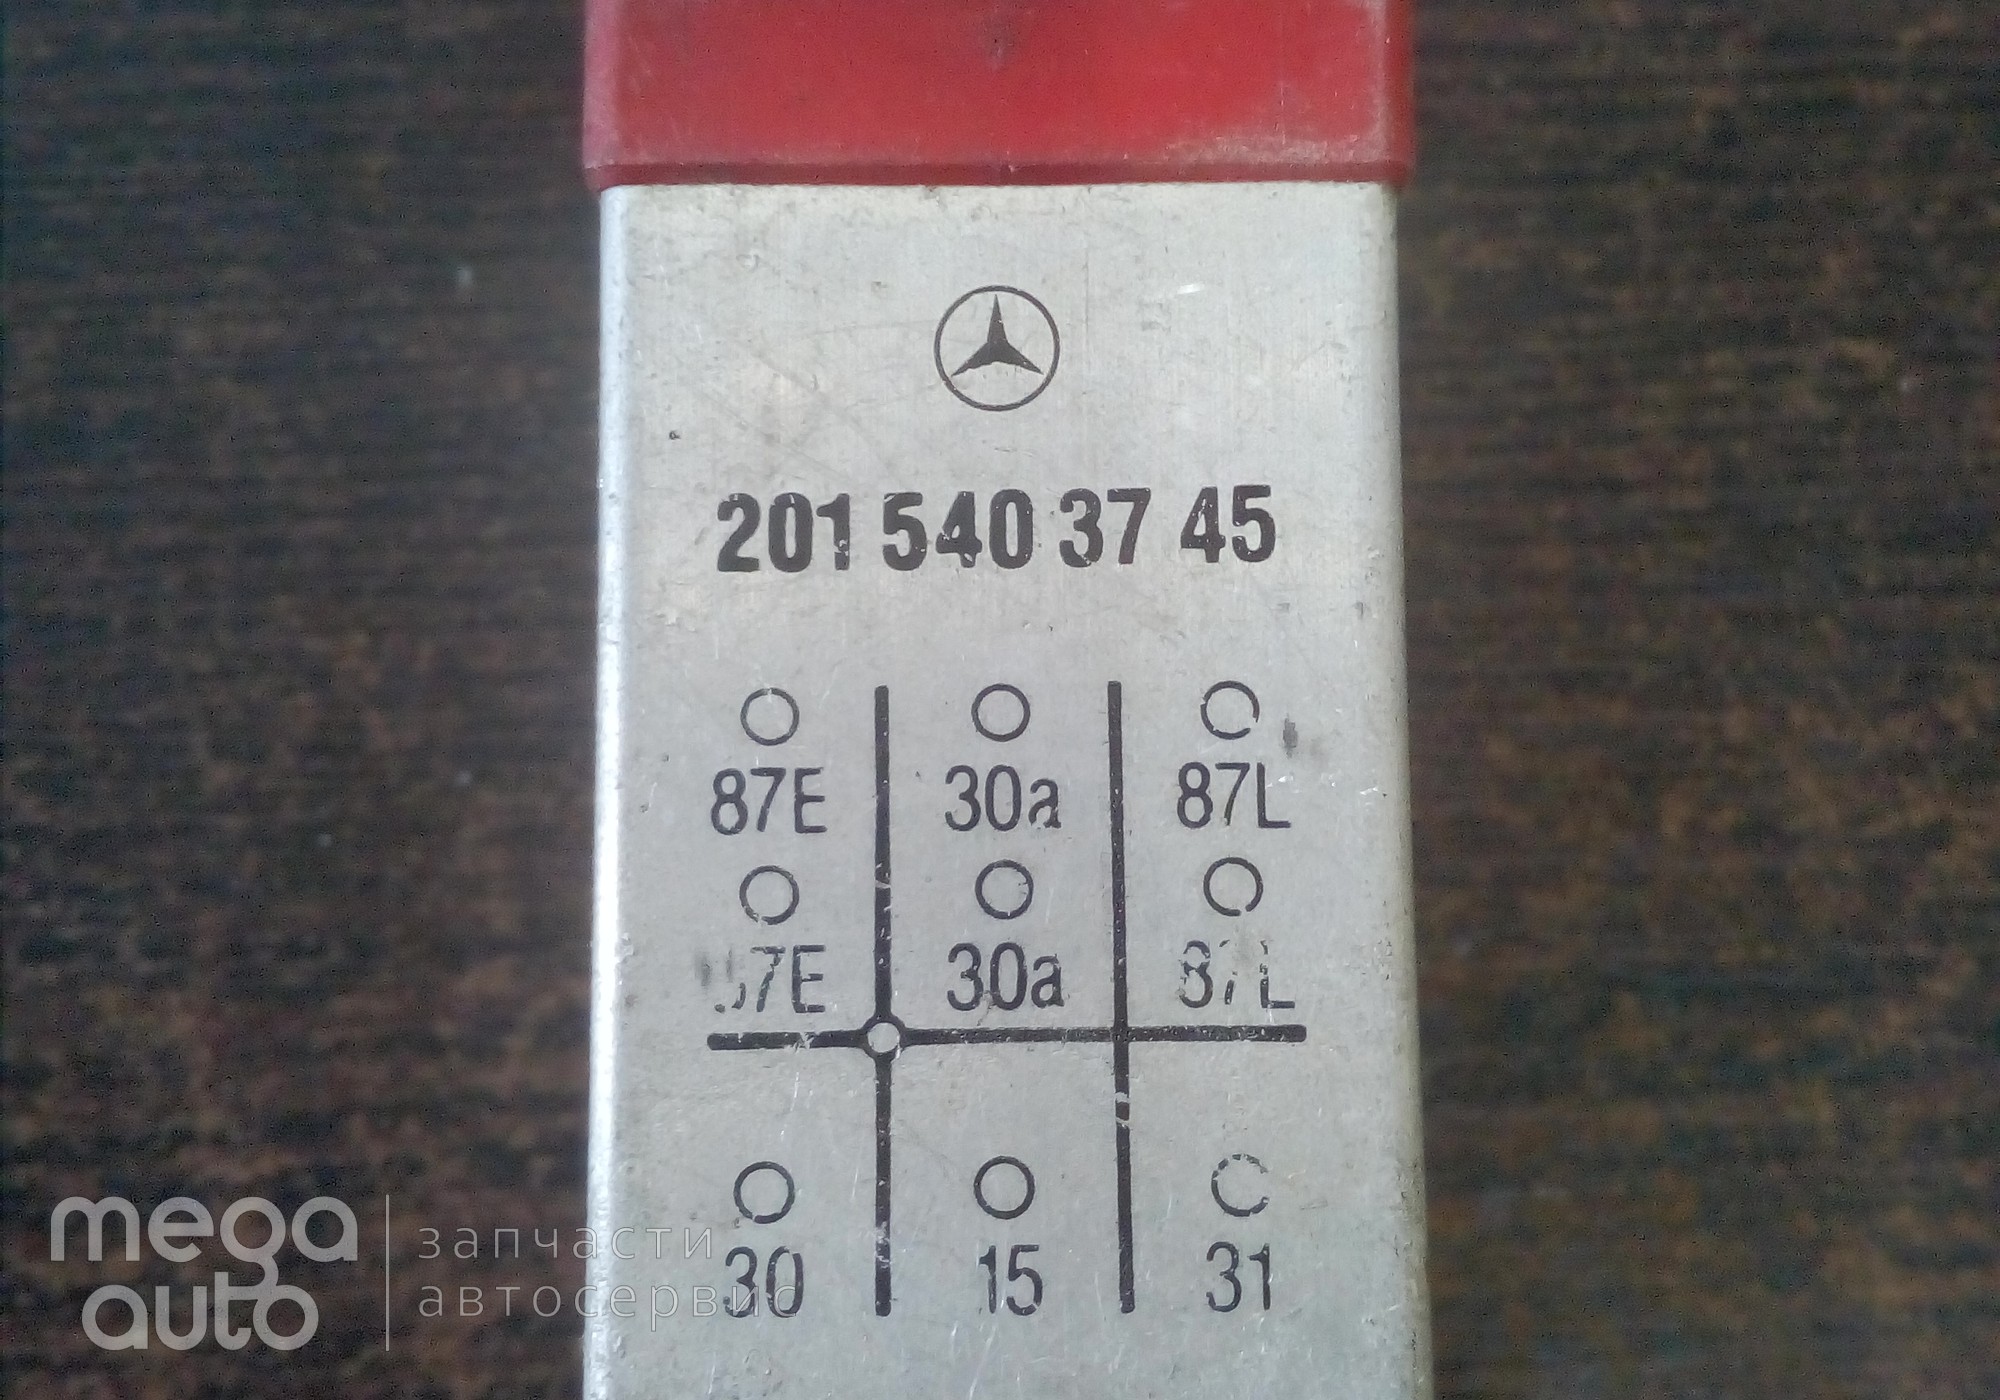 2015403745 Реле перегрузки мерседес для Mercedes-Benz